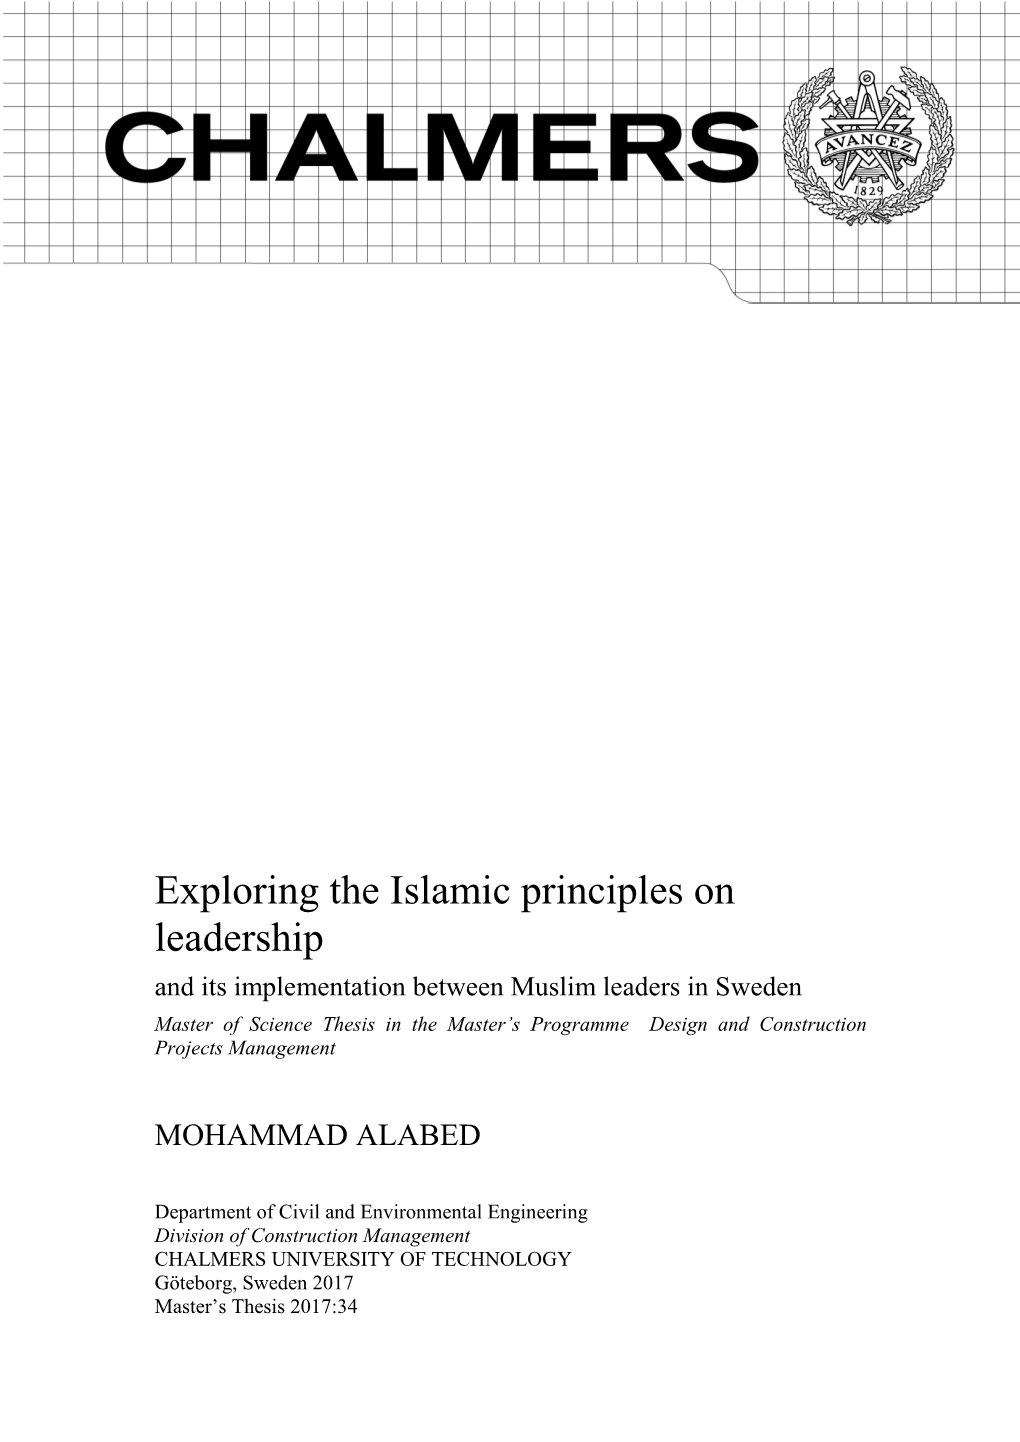 Exploring the Islamic Principles on Leadership